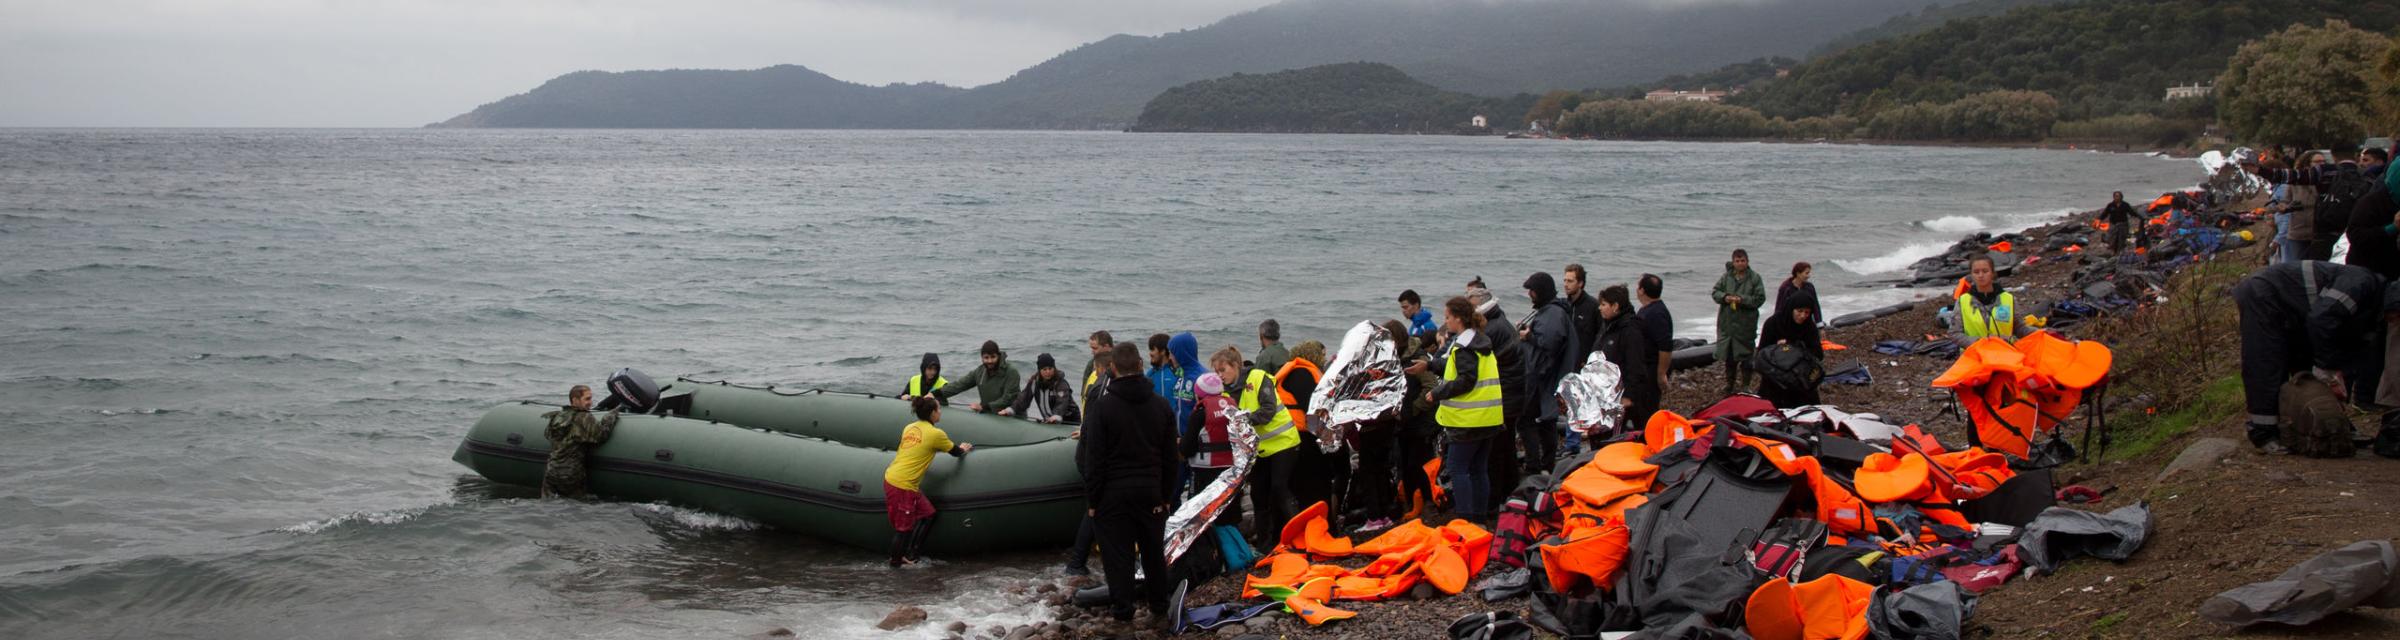 A boat arrives on Lesvos